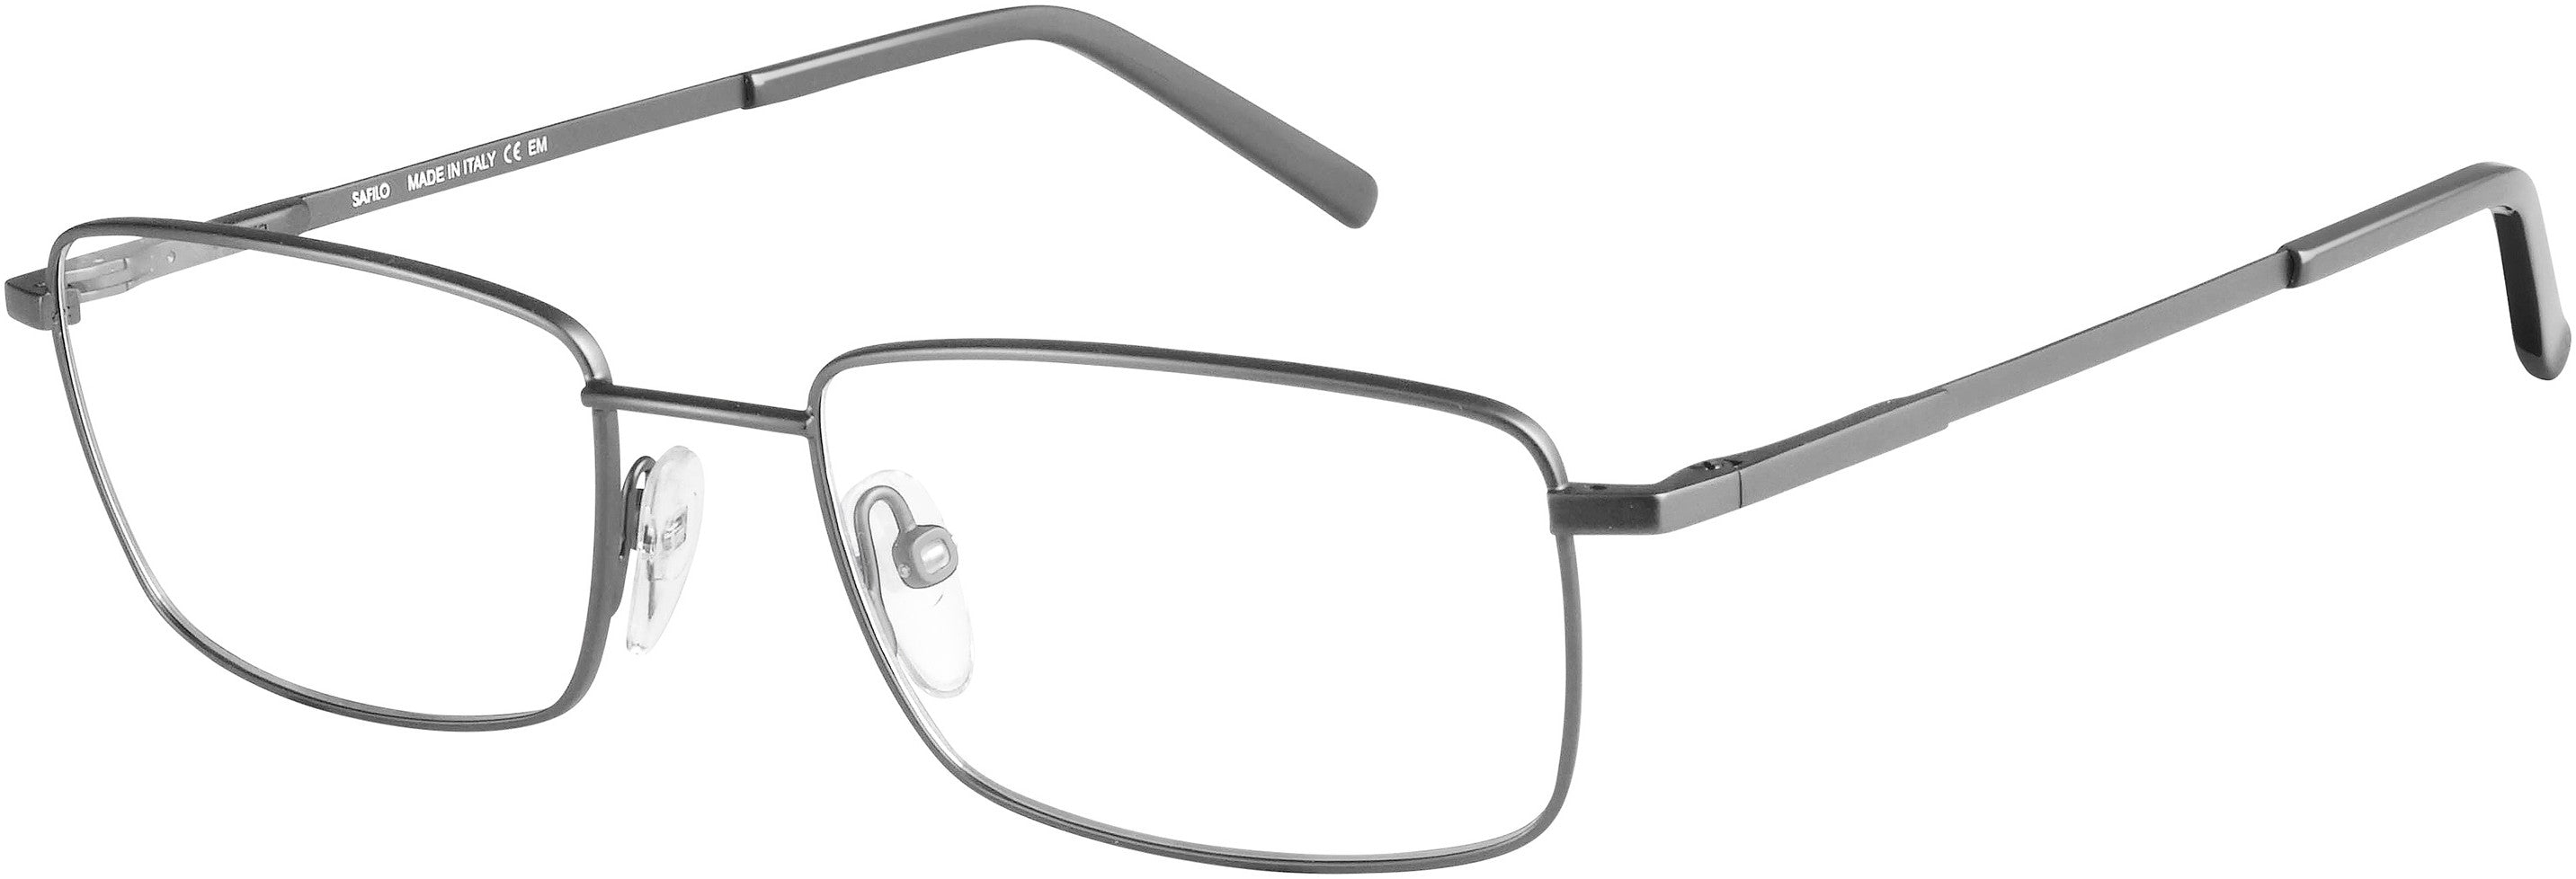  Elasta 7217 Rectangular Eyeglasses 0R80-0R80  Semi Matte Dark Ruthenium (00 Demo Lens)